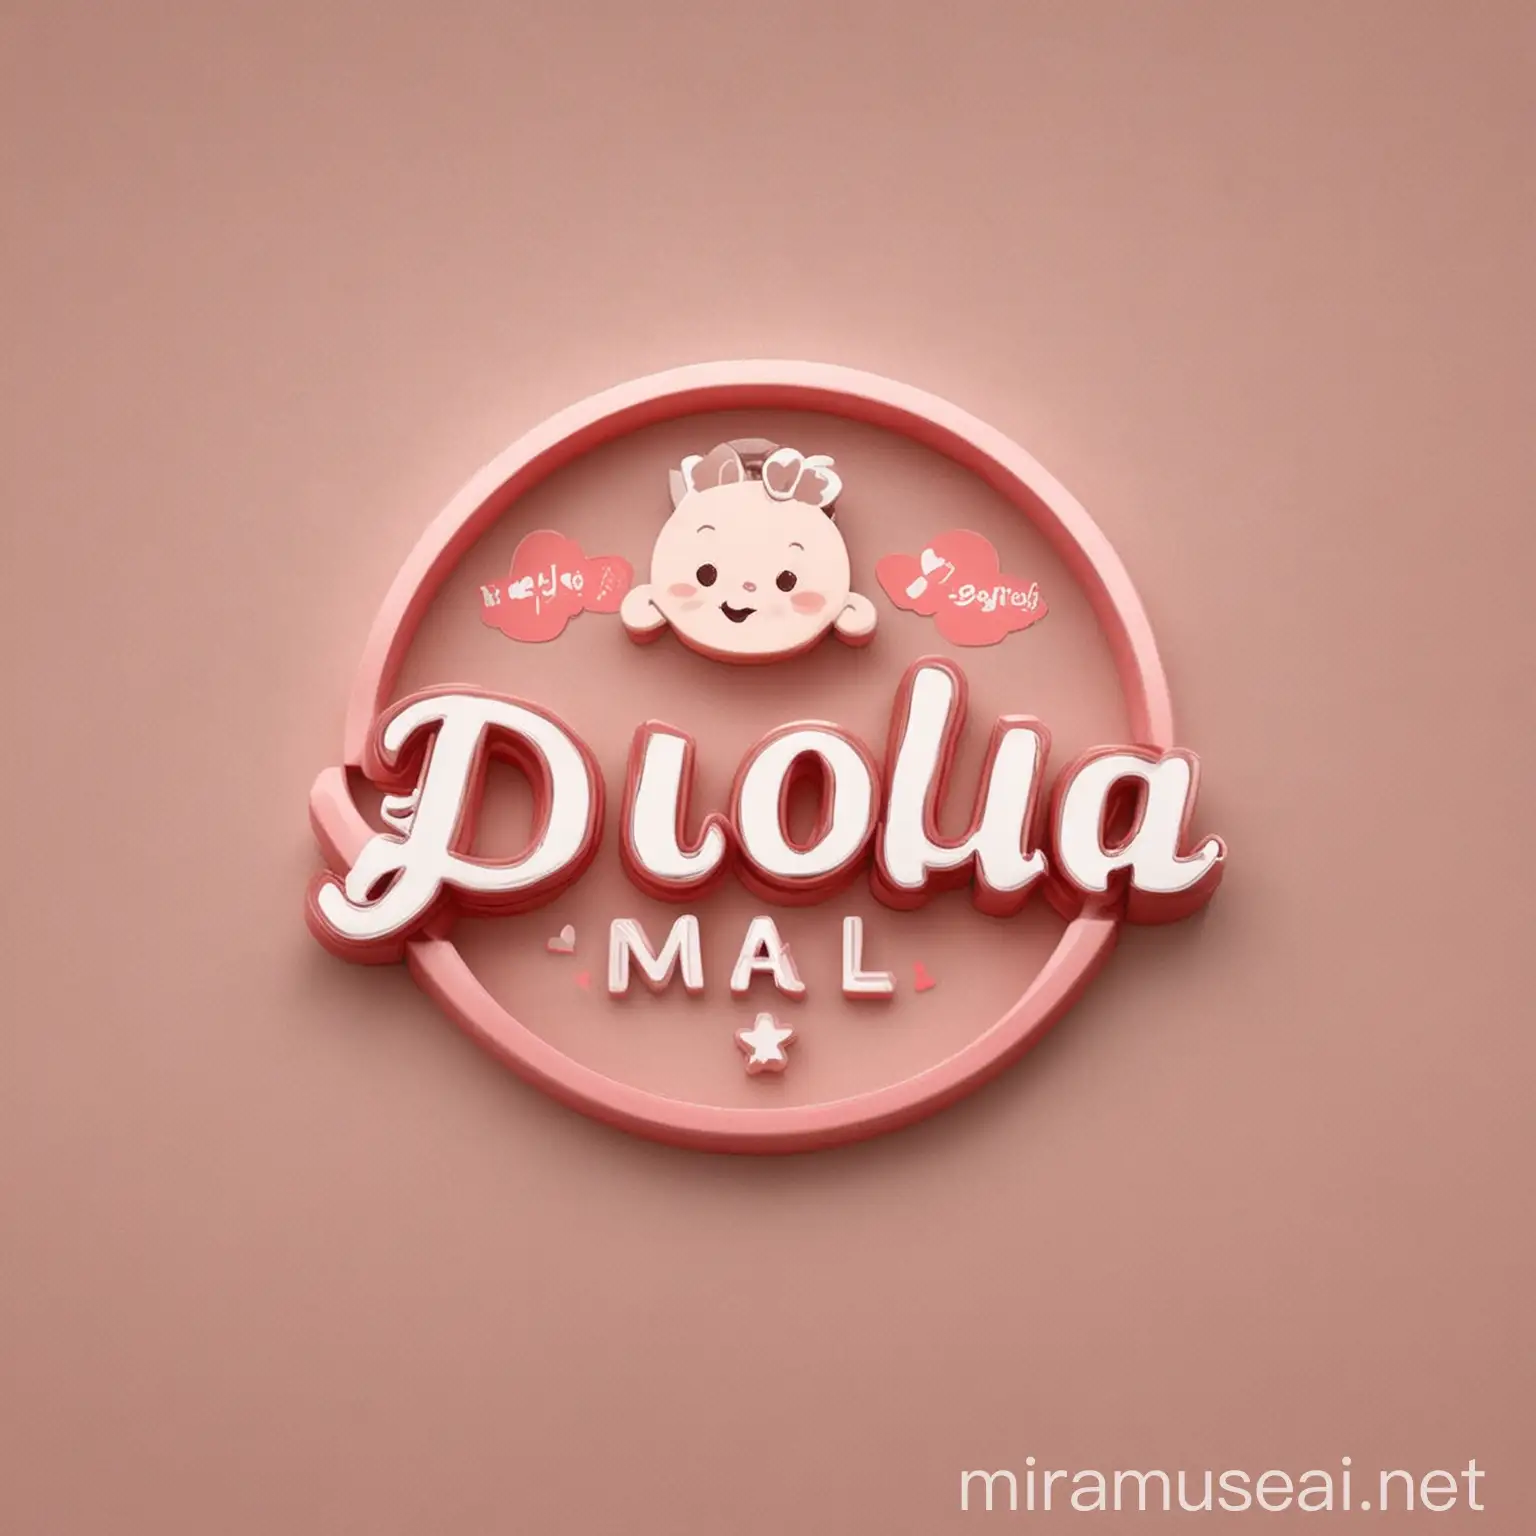 DUOLA MALL请用这个英文设计一个母婴logo